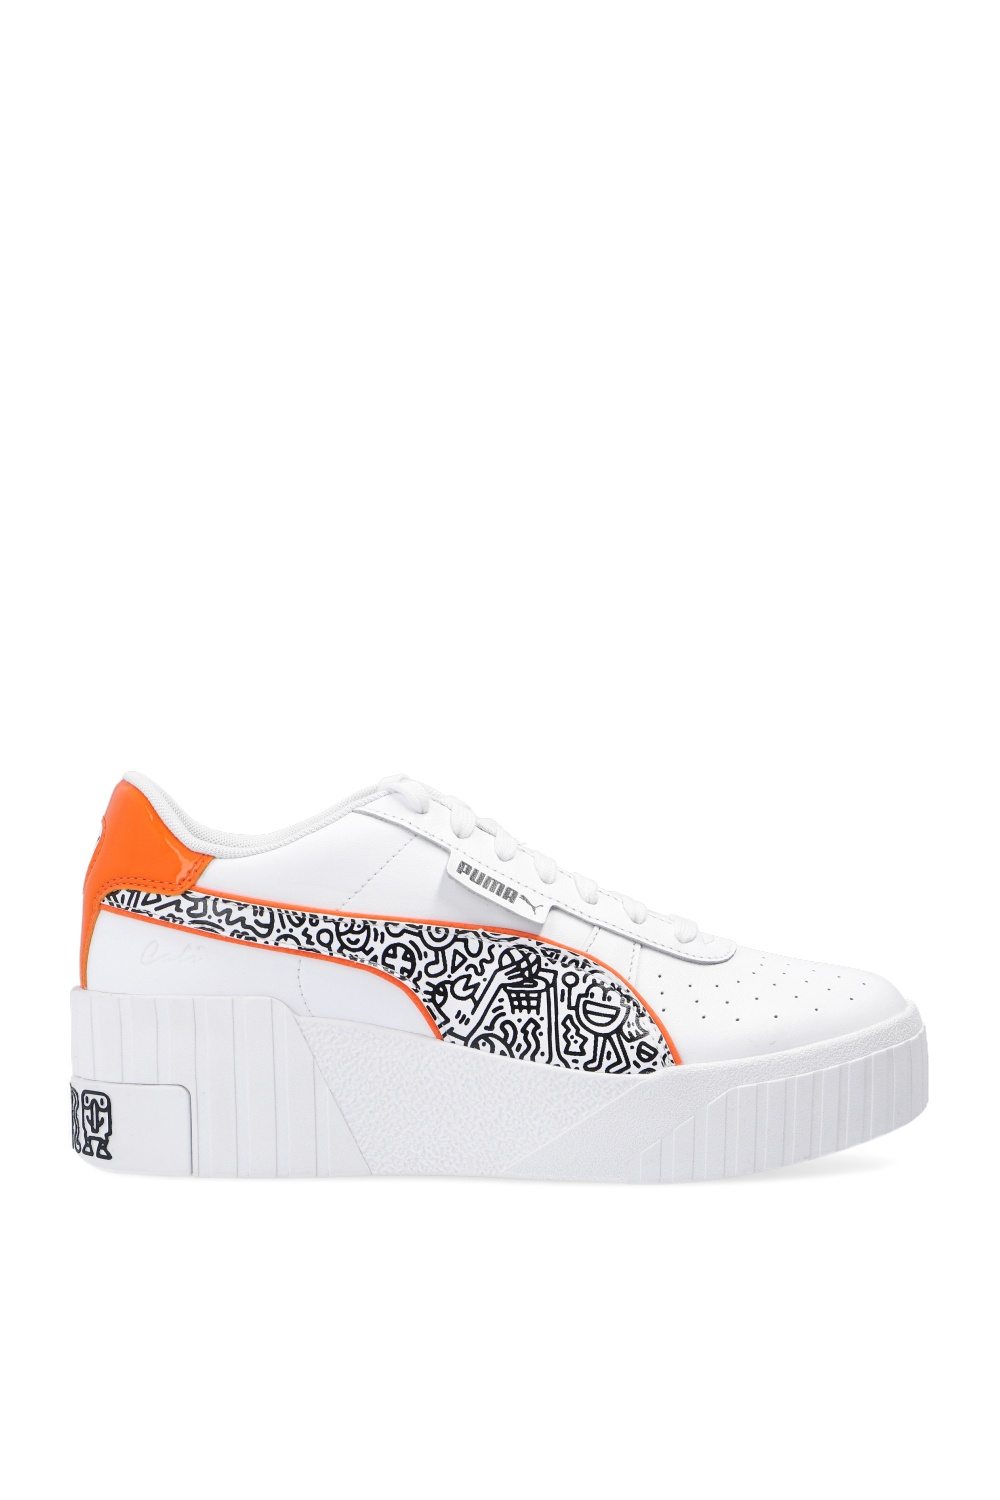 puma sneakers orange